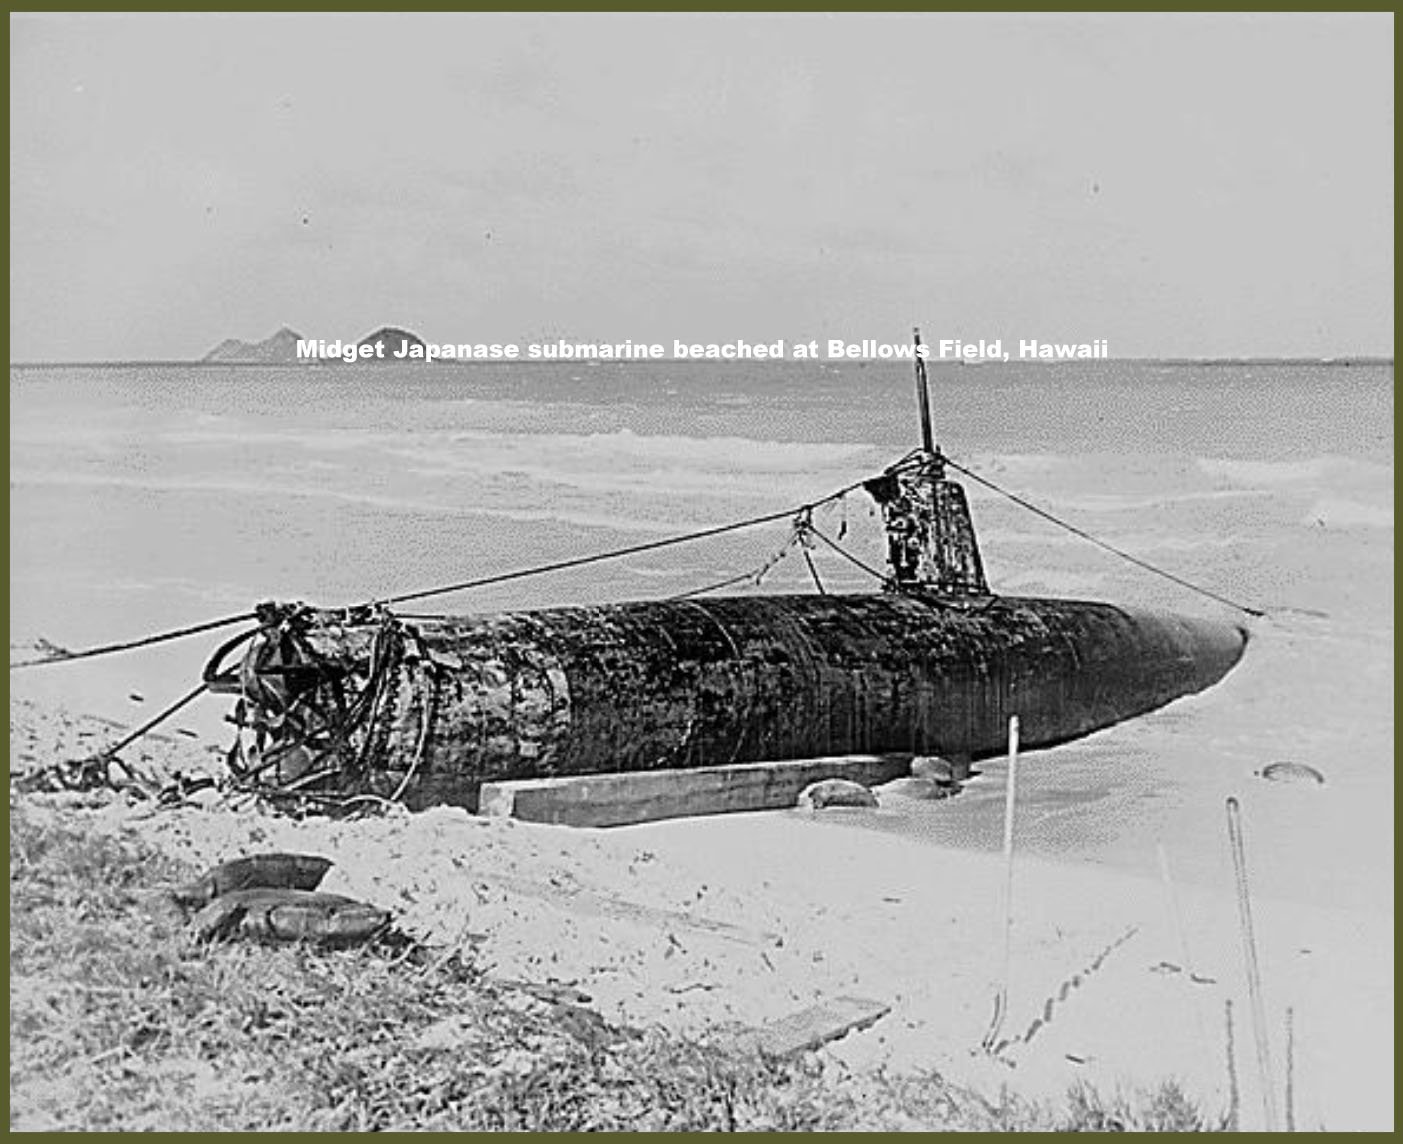 Midget Japanese submarine beached at Bellows Field, Hawaii